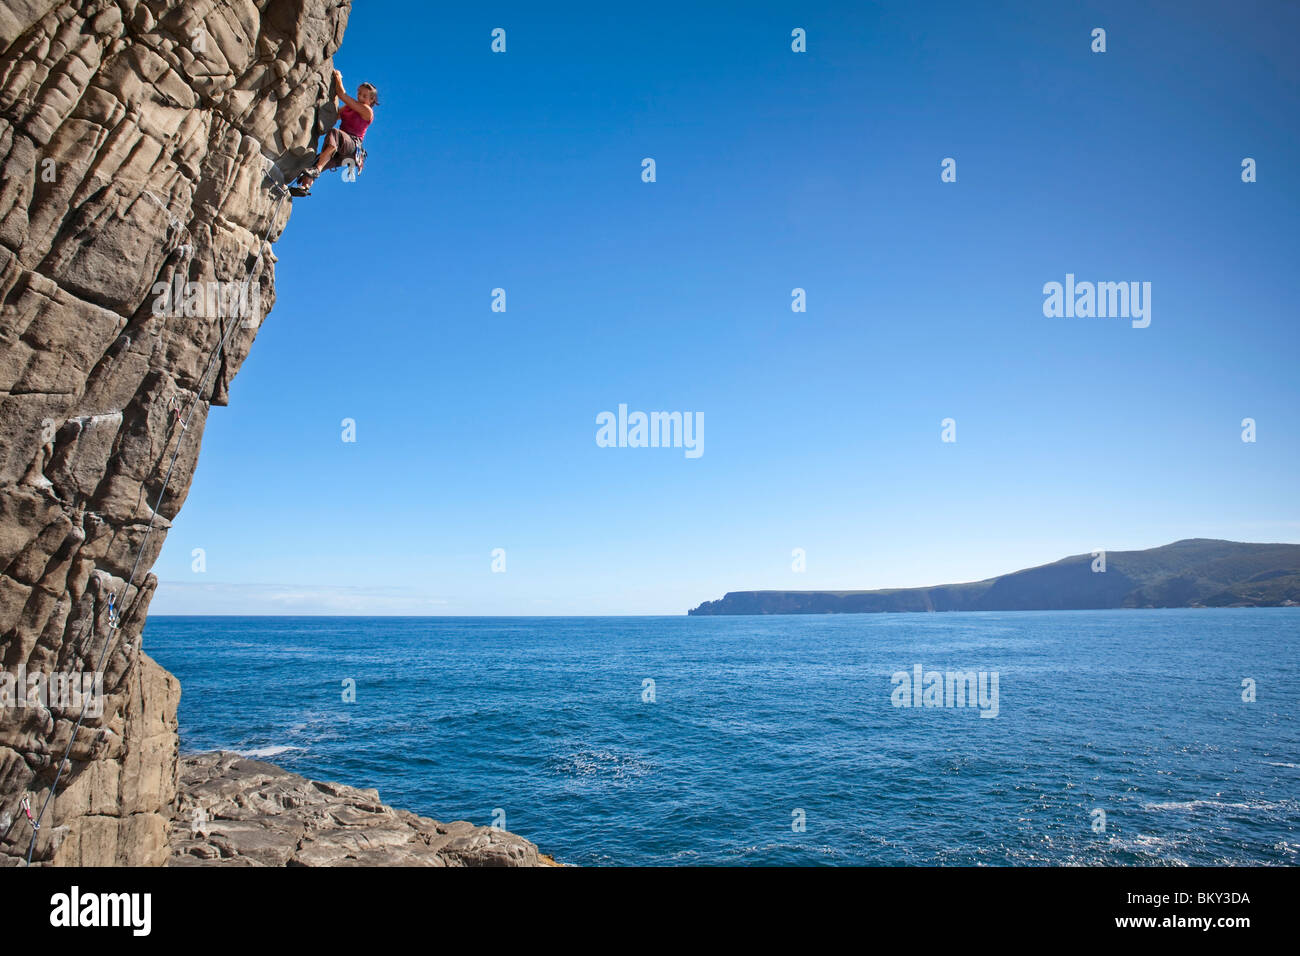 A woman is climbing a rockface on the Tasman Peninsula, Tasmania, Australia. Stock Photo